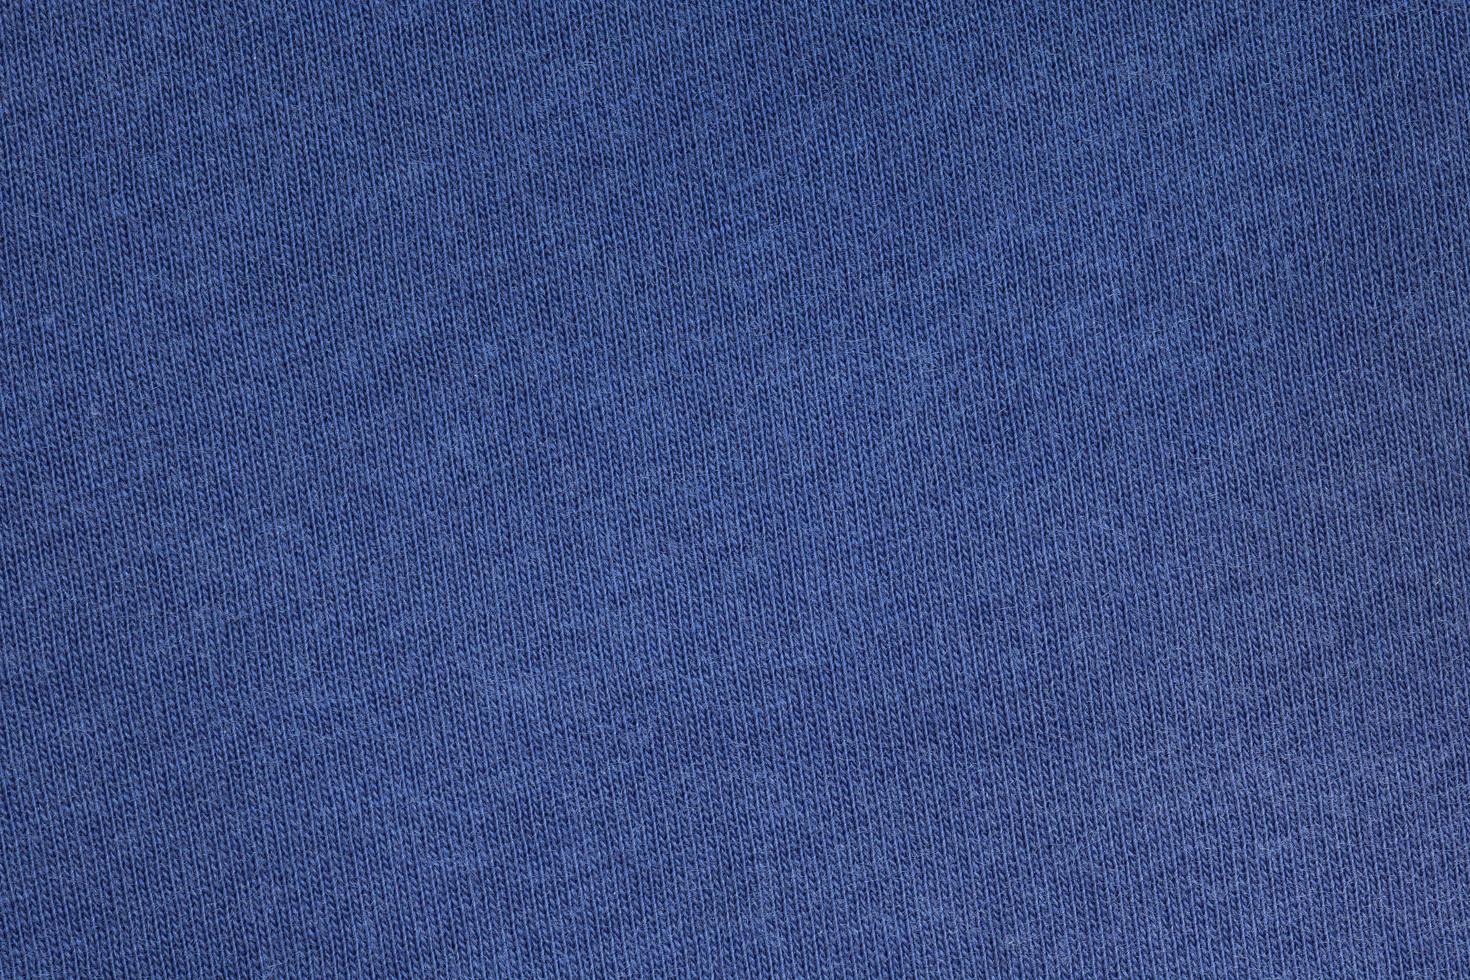 textura de tecido azul vista superior foto